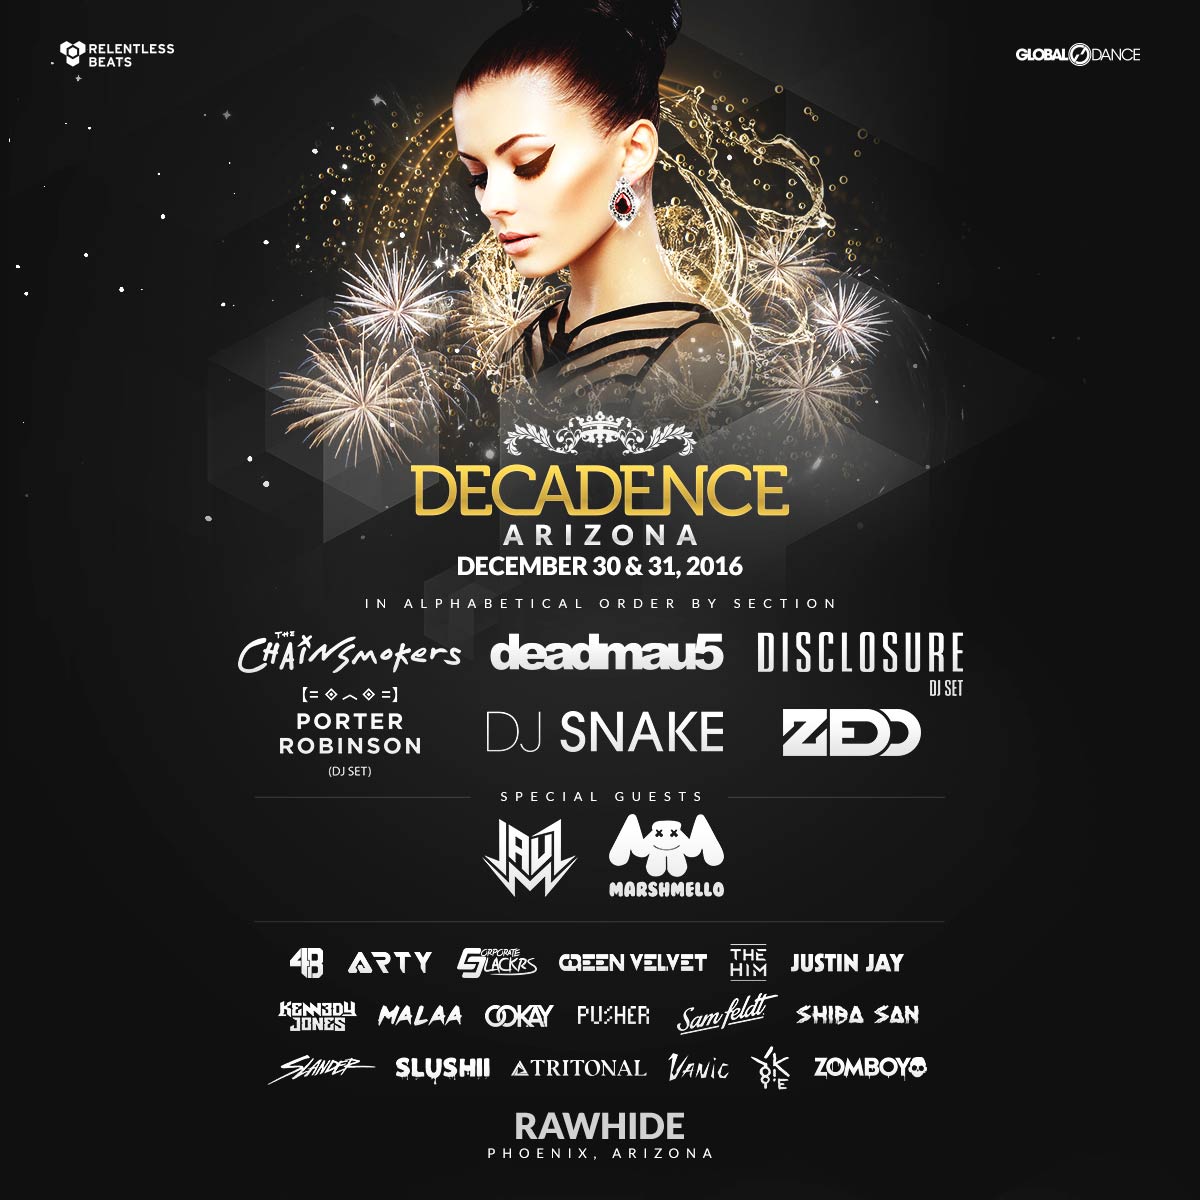 decadence-arizona-2016-event-preview-edm-identity